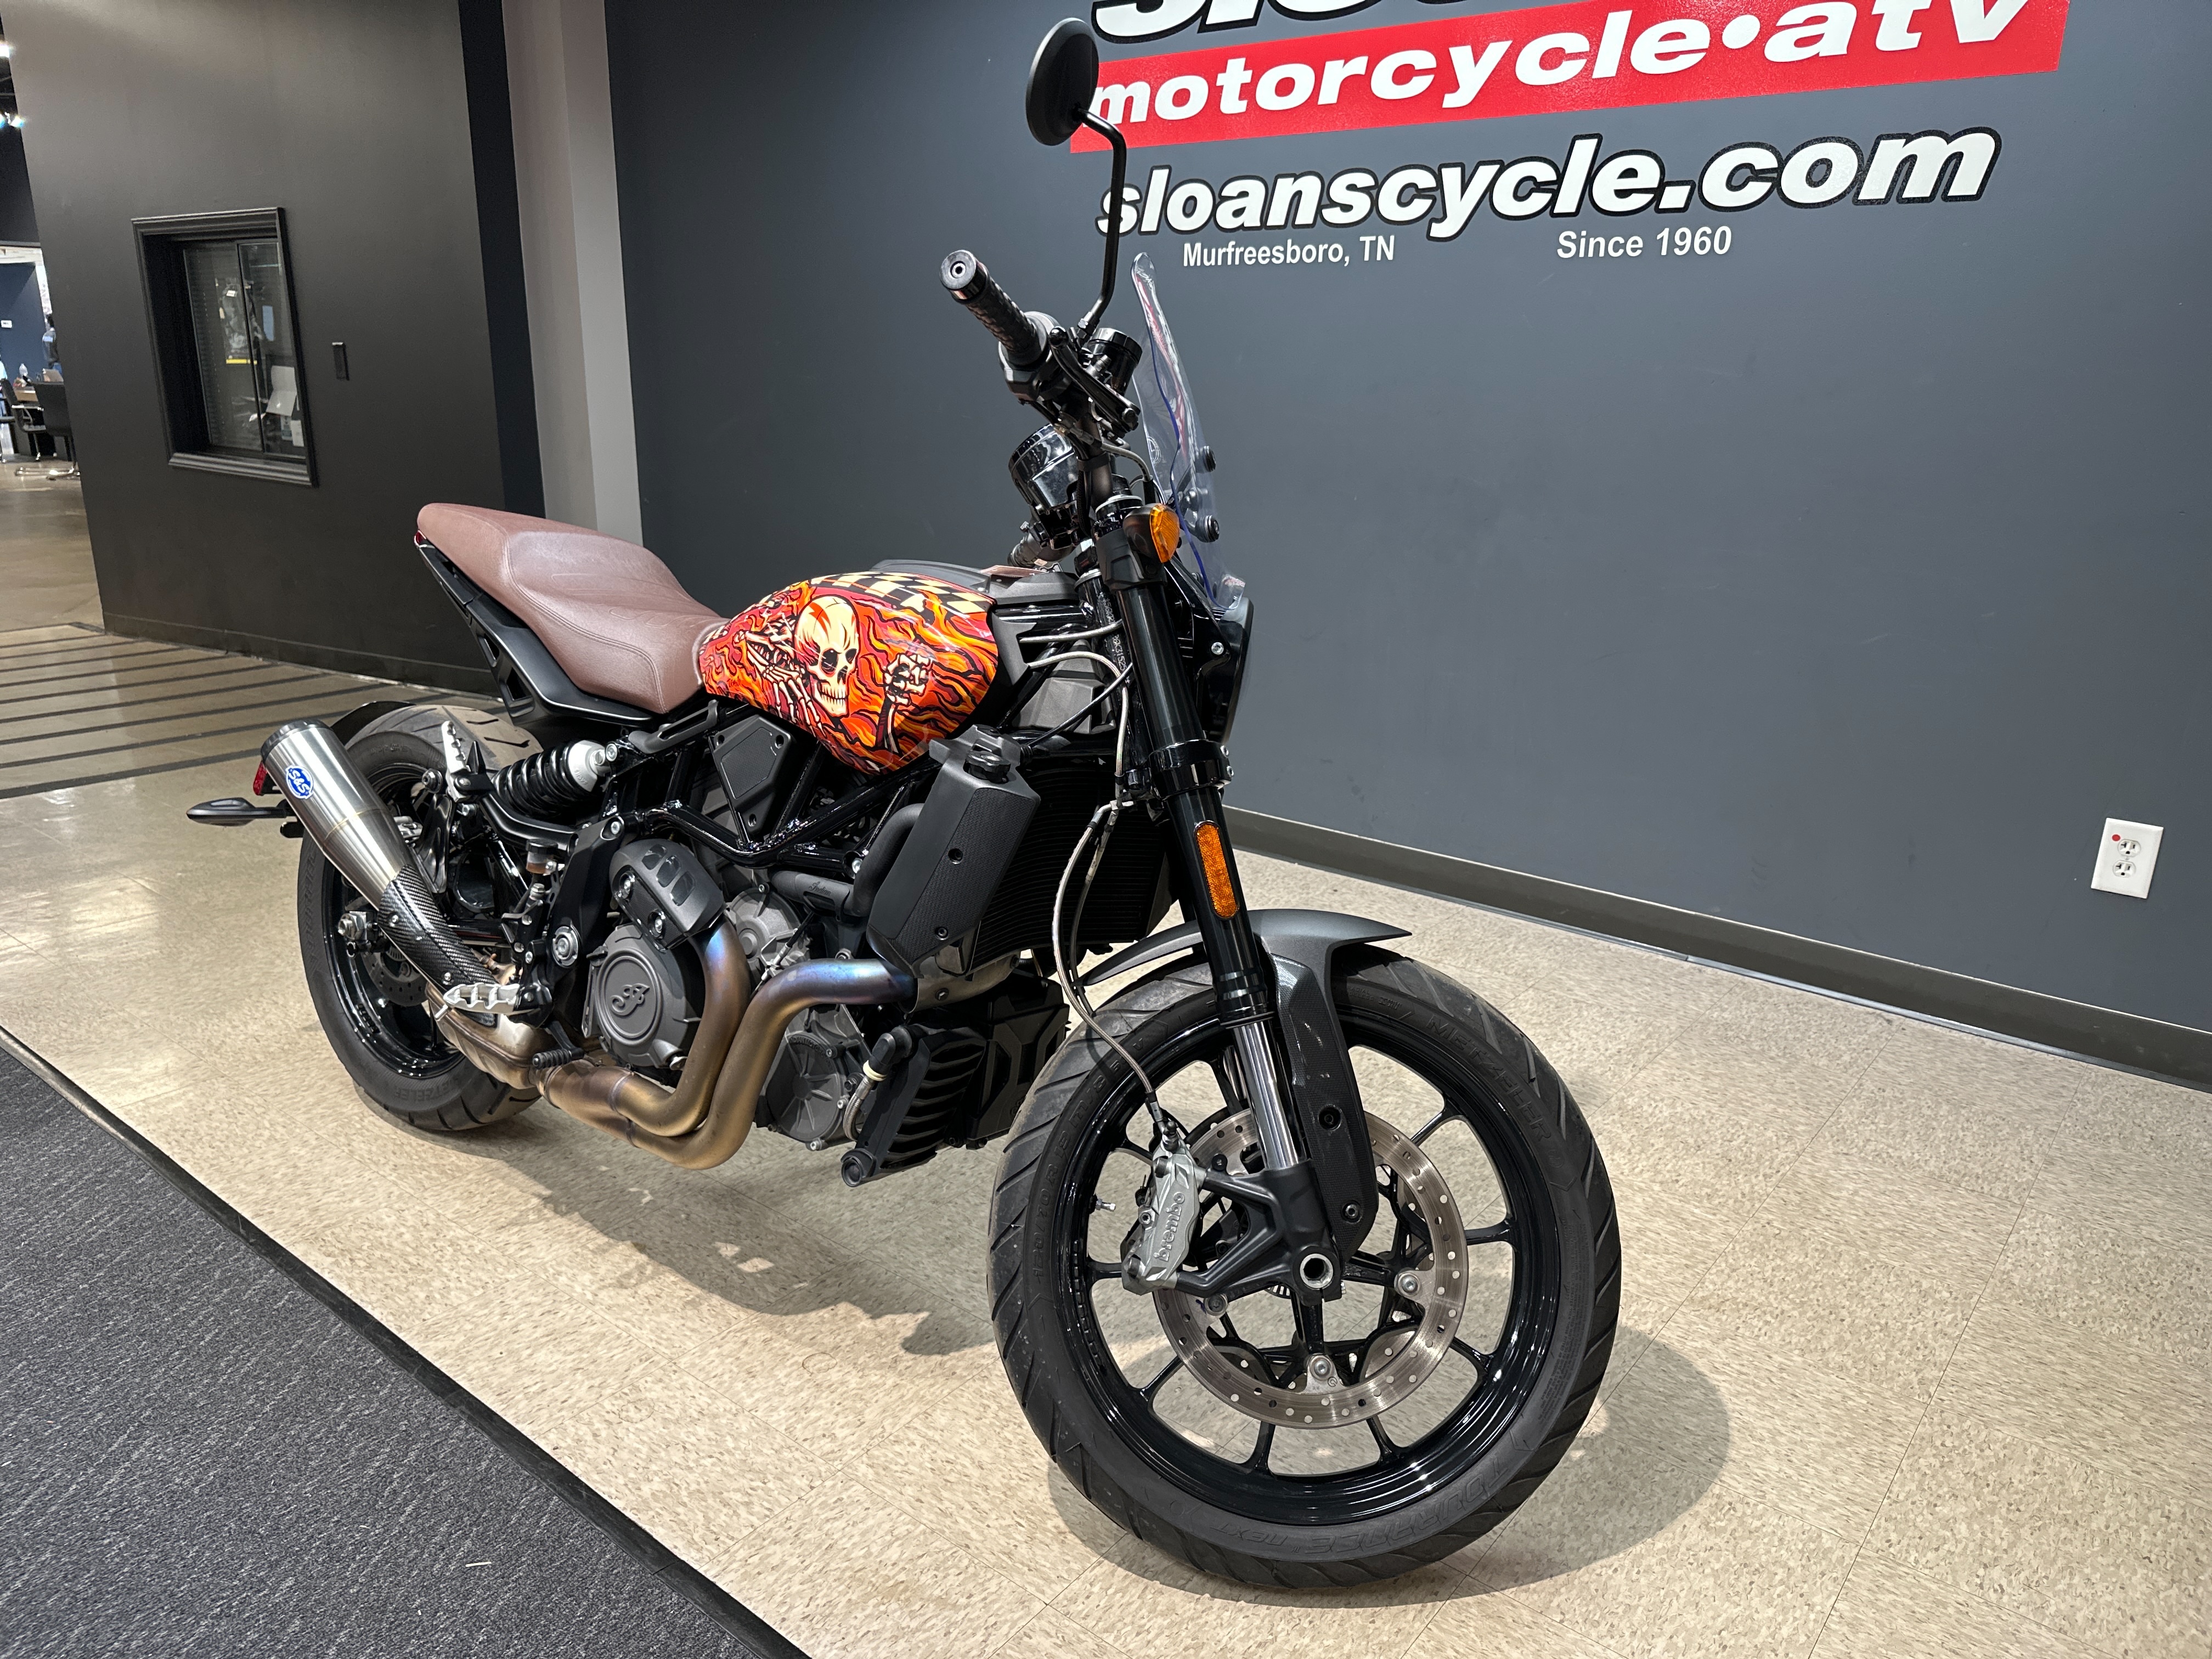 2019 Indian Motorcycle FTR 1200 Base at Sloans Motorcycle ATV, Murfreesboro, TN, 37129